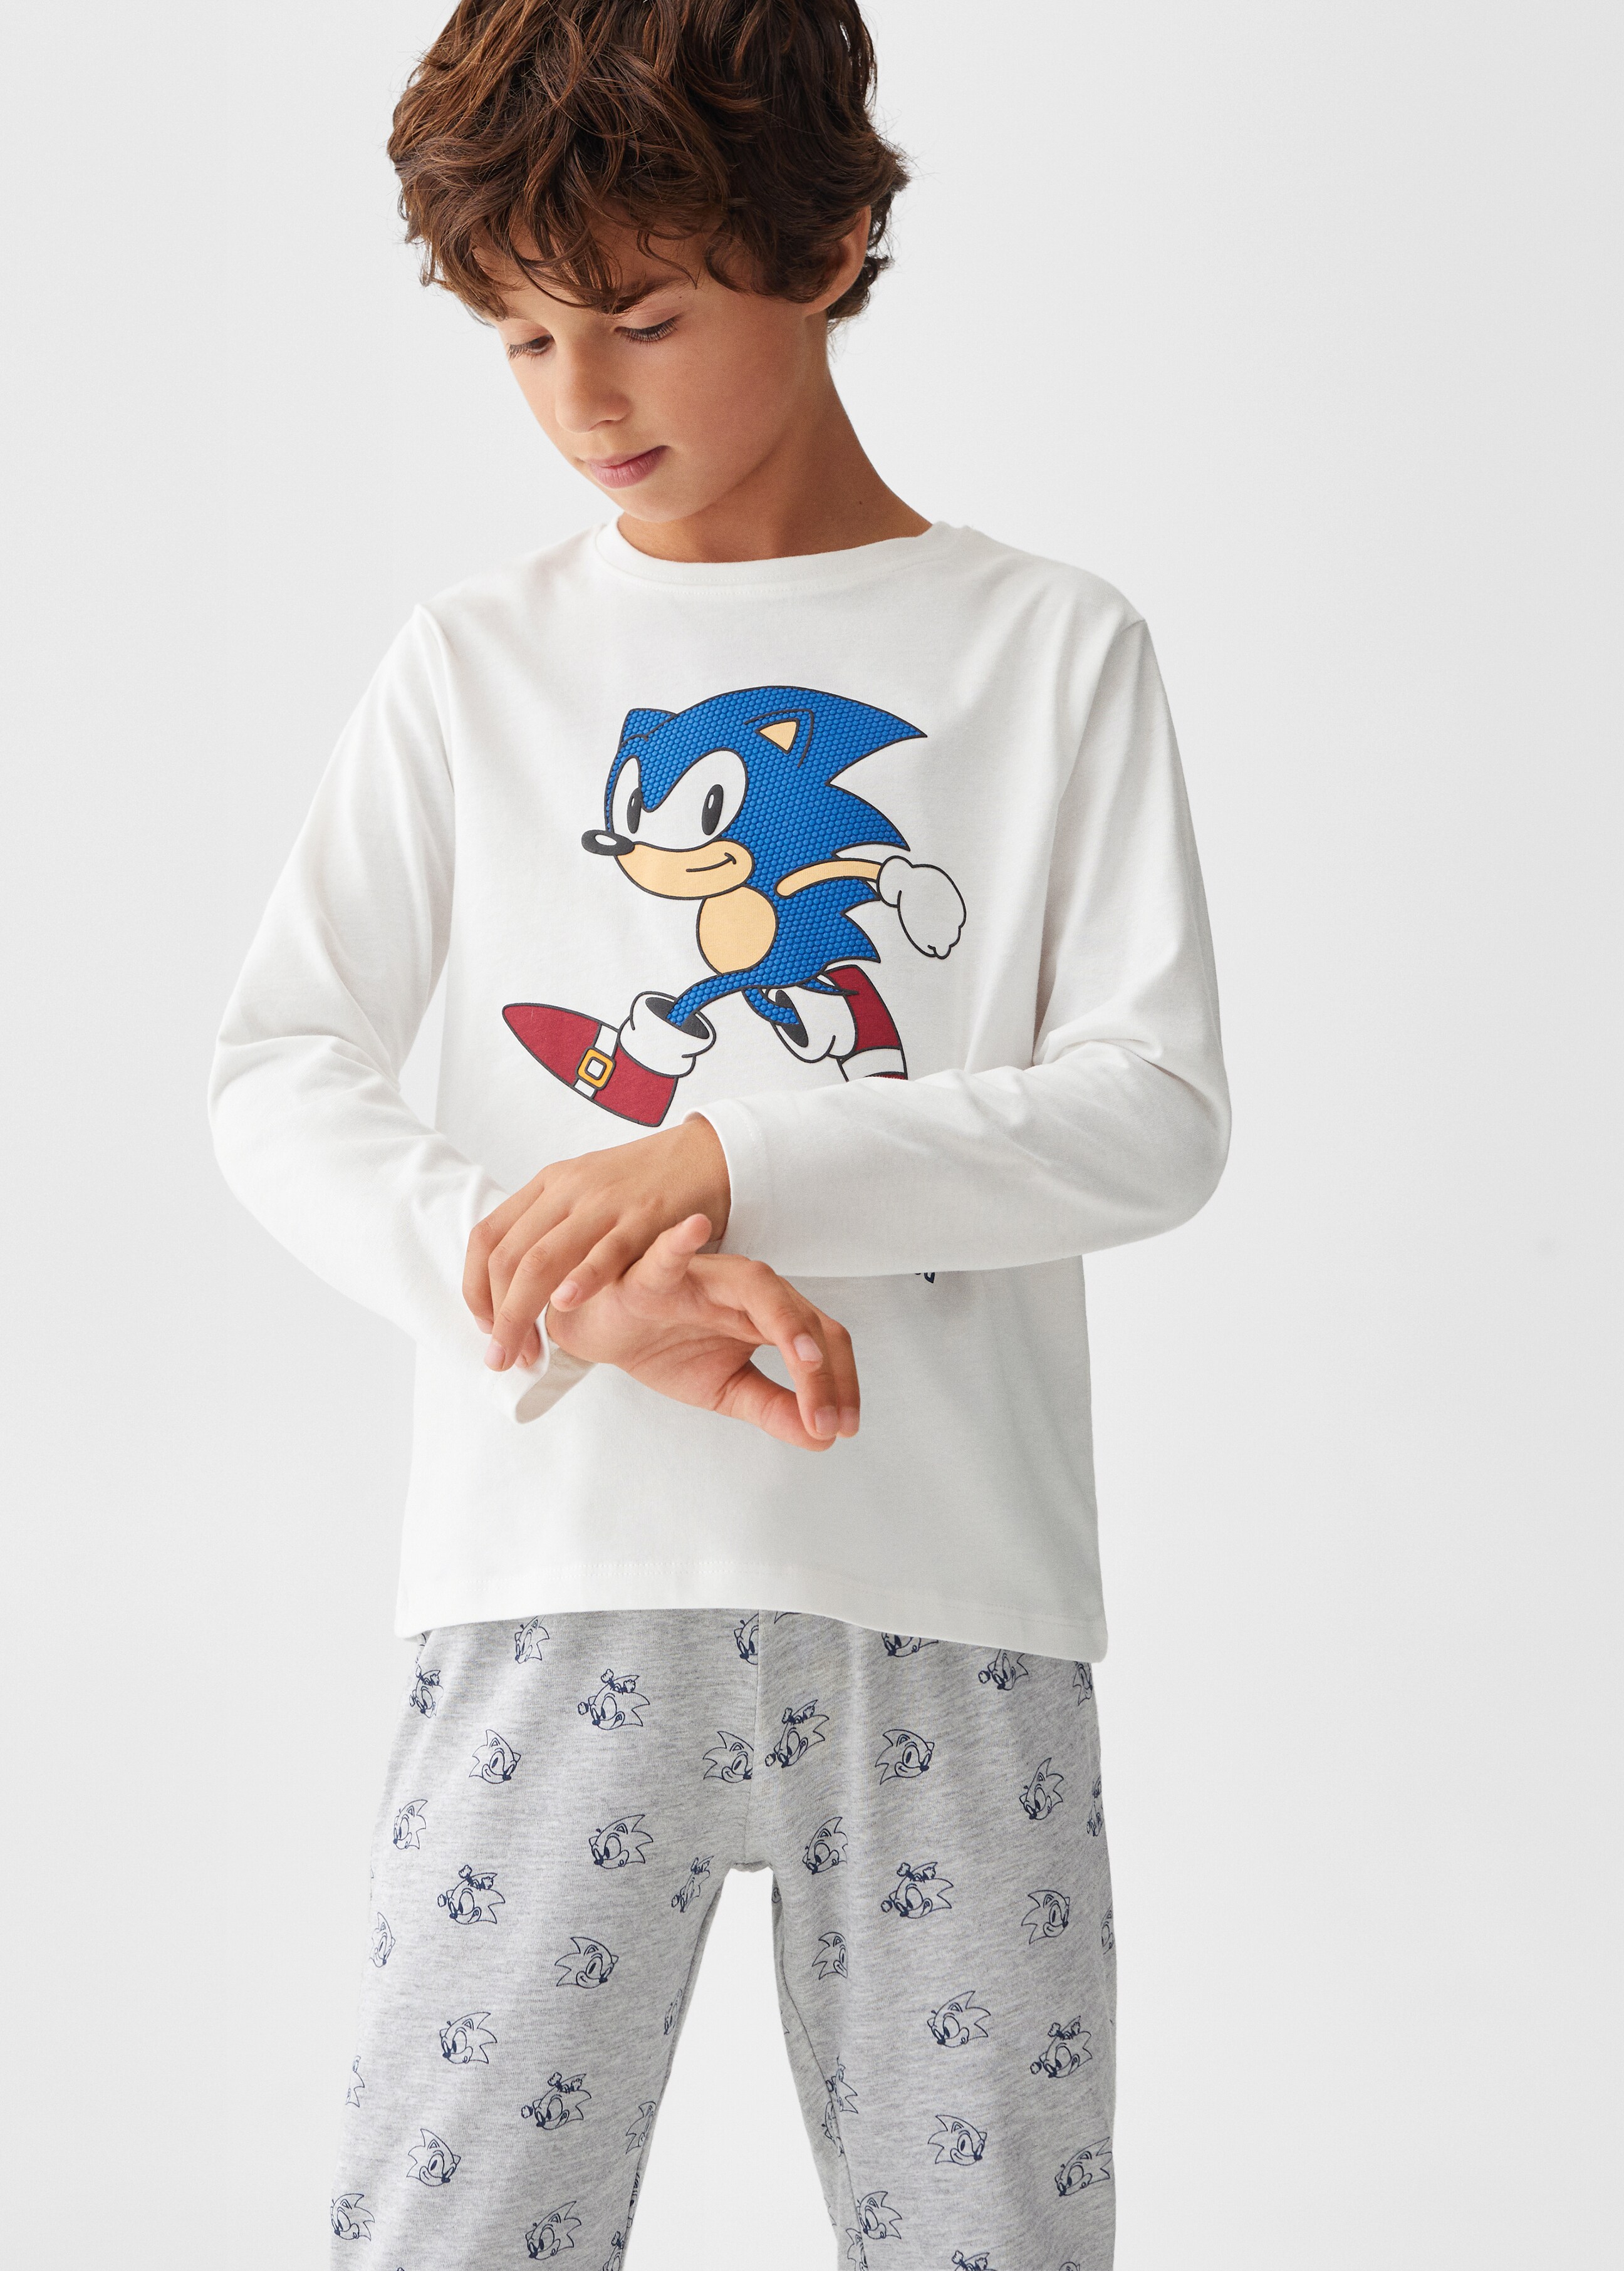 Sonic long pyjamas - Medium plane